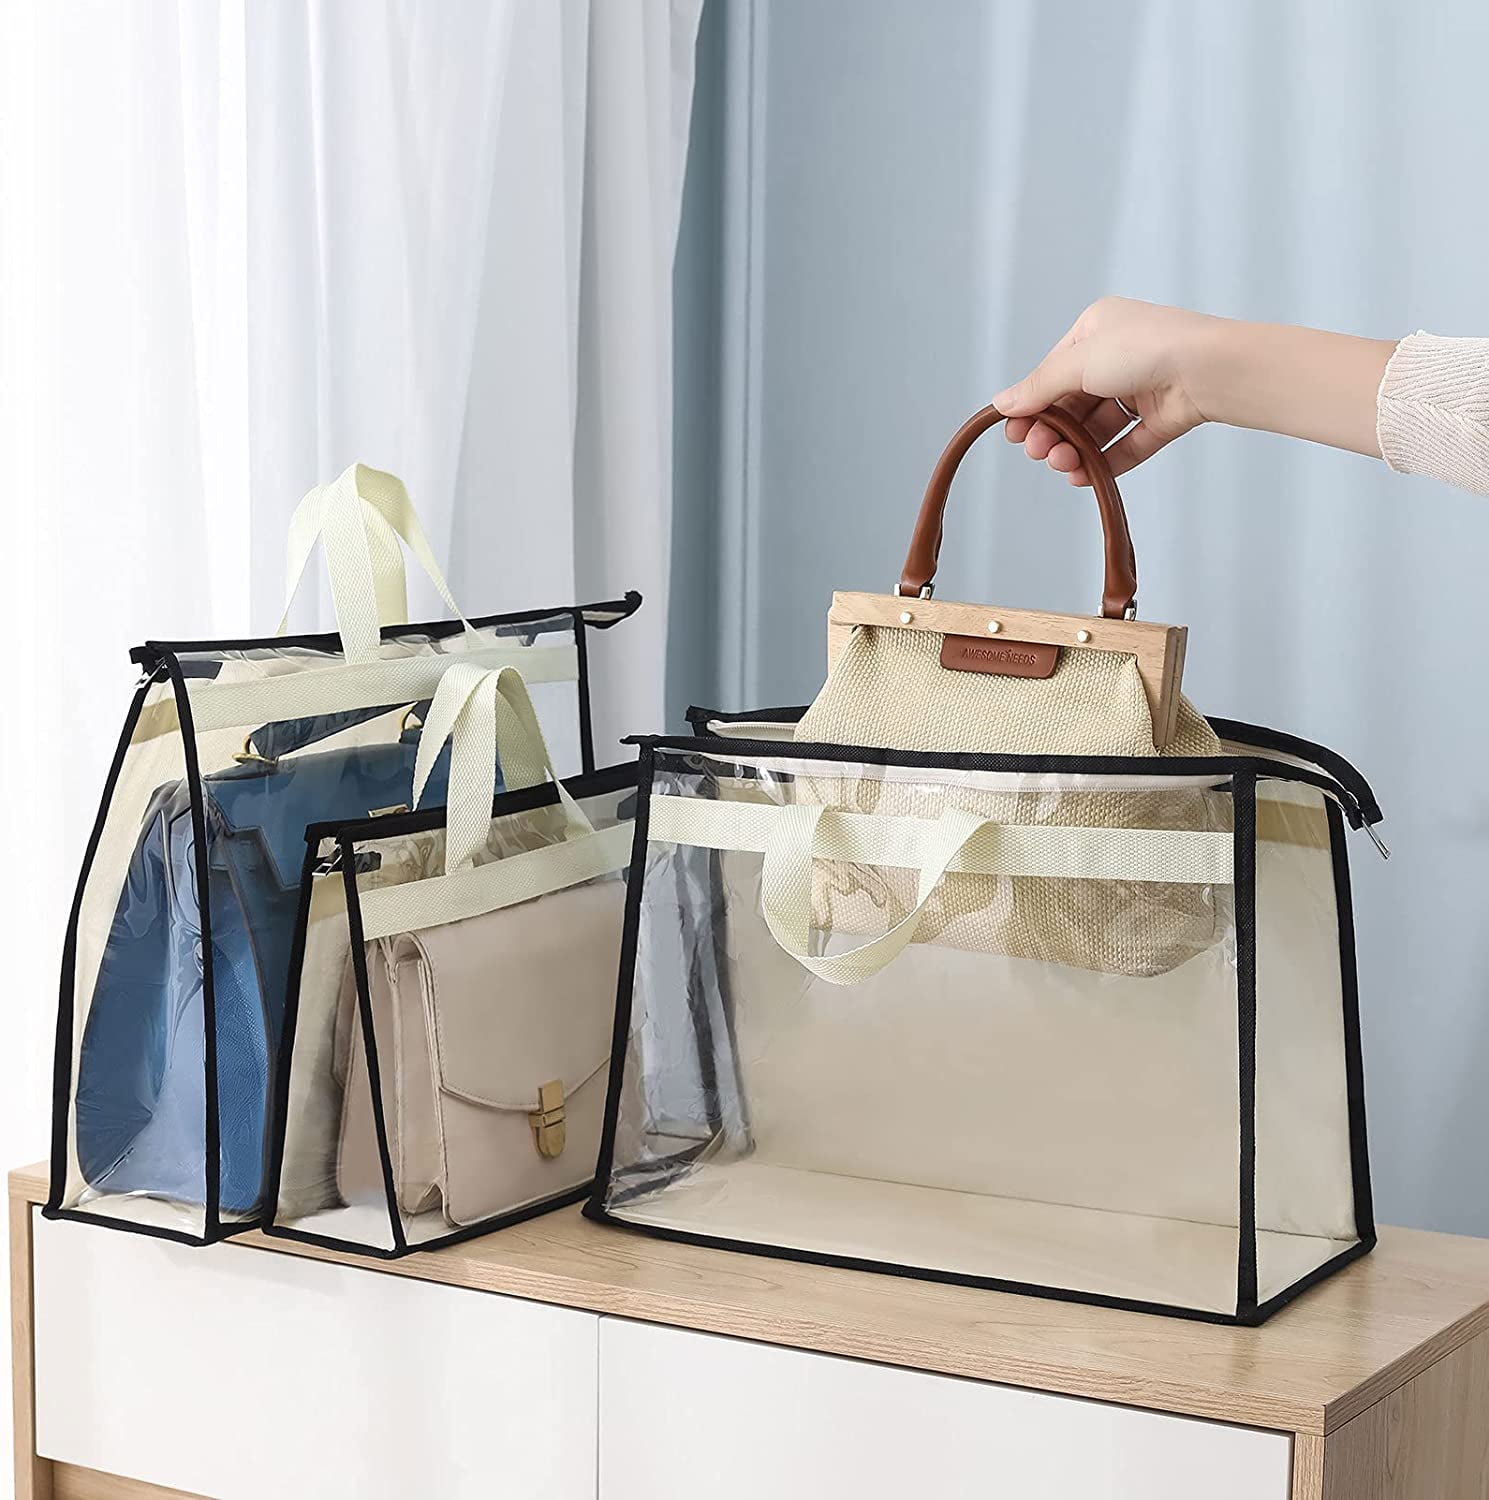 5 Pack Dust-Proof Transparent Handbag Storage Bags Purse Organizer-Gray